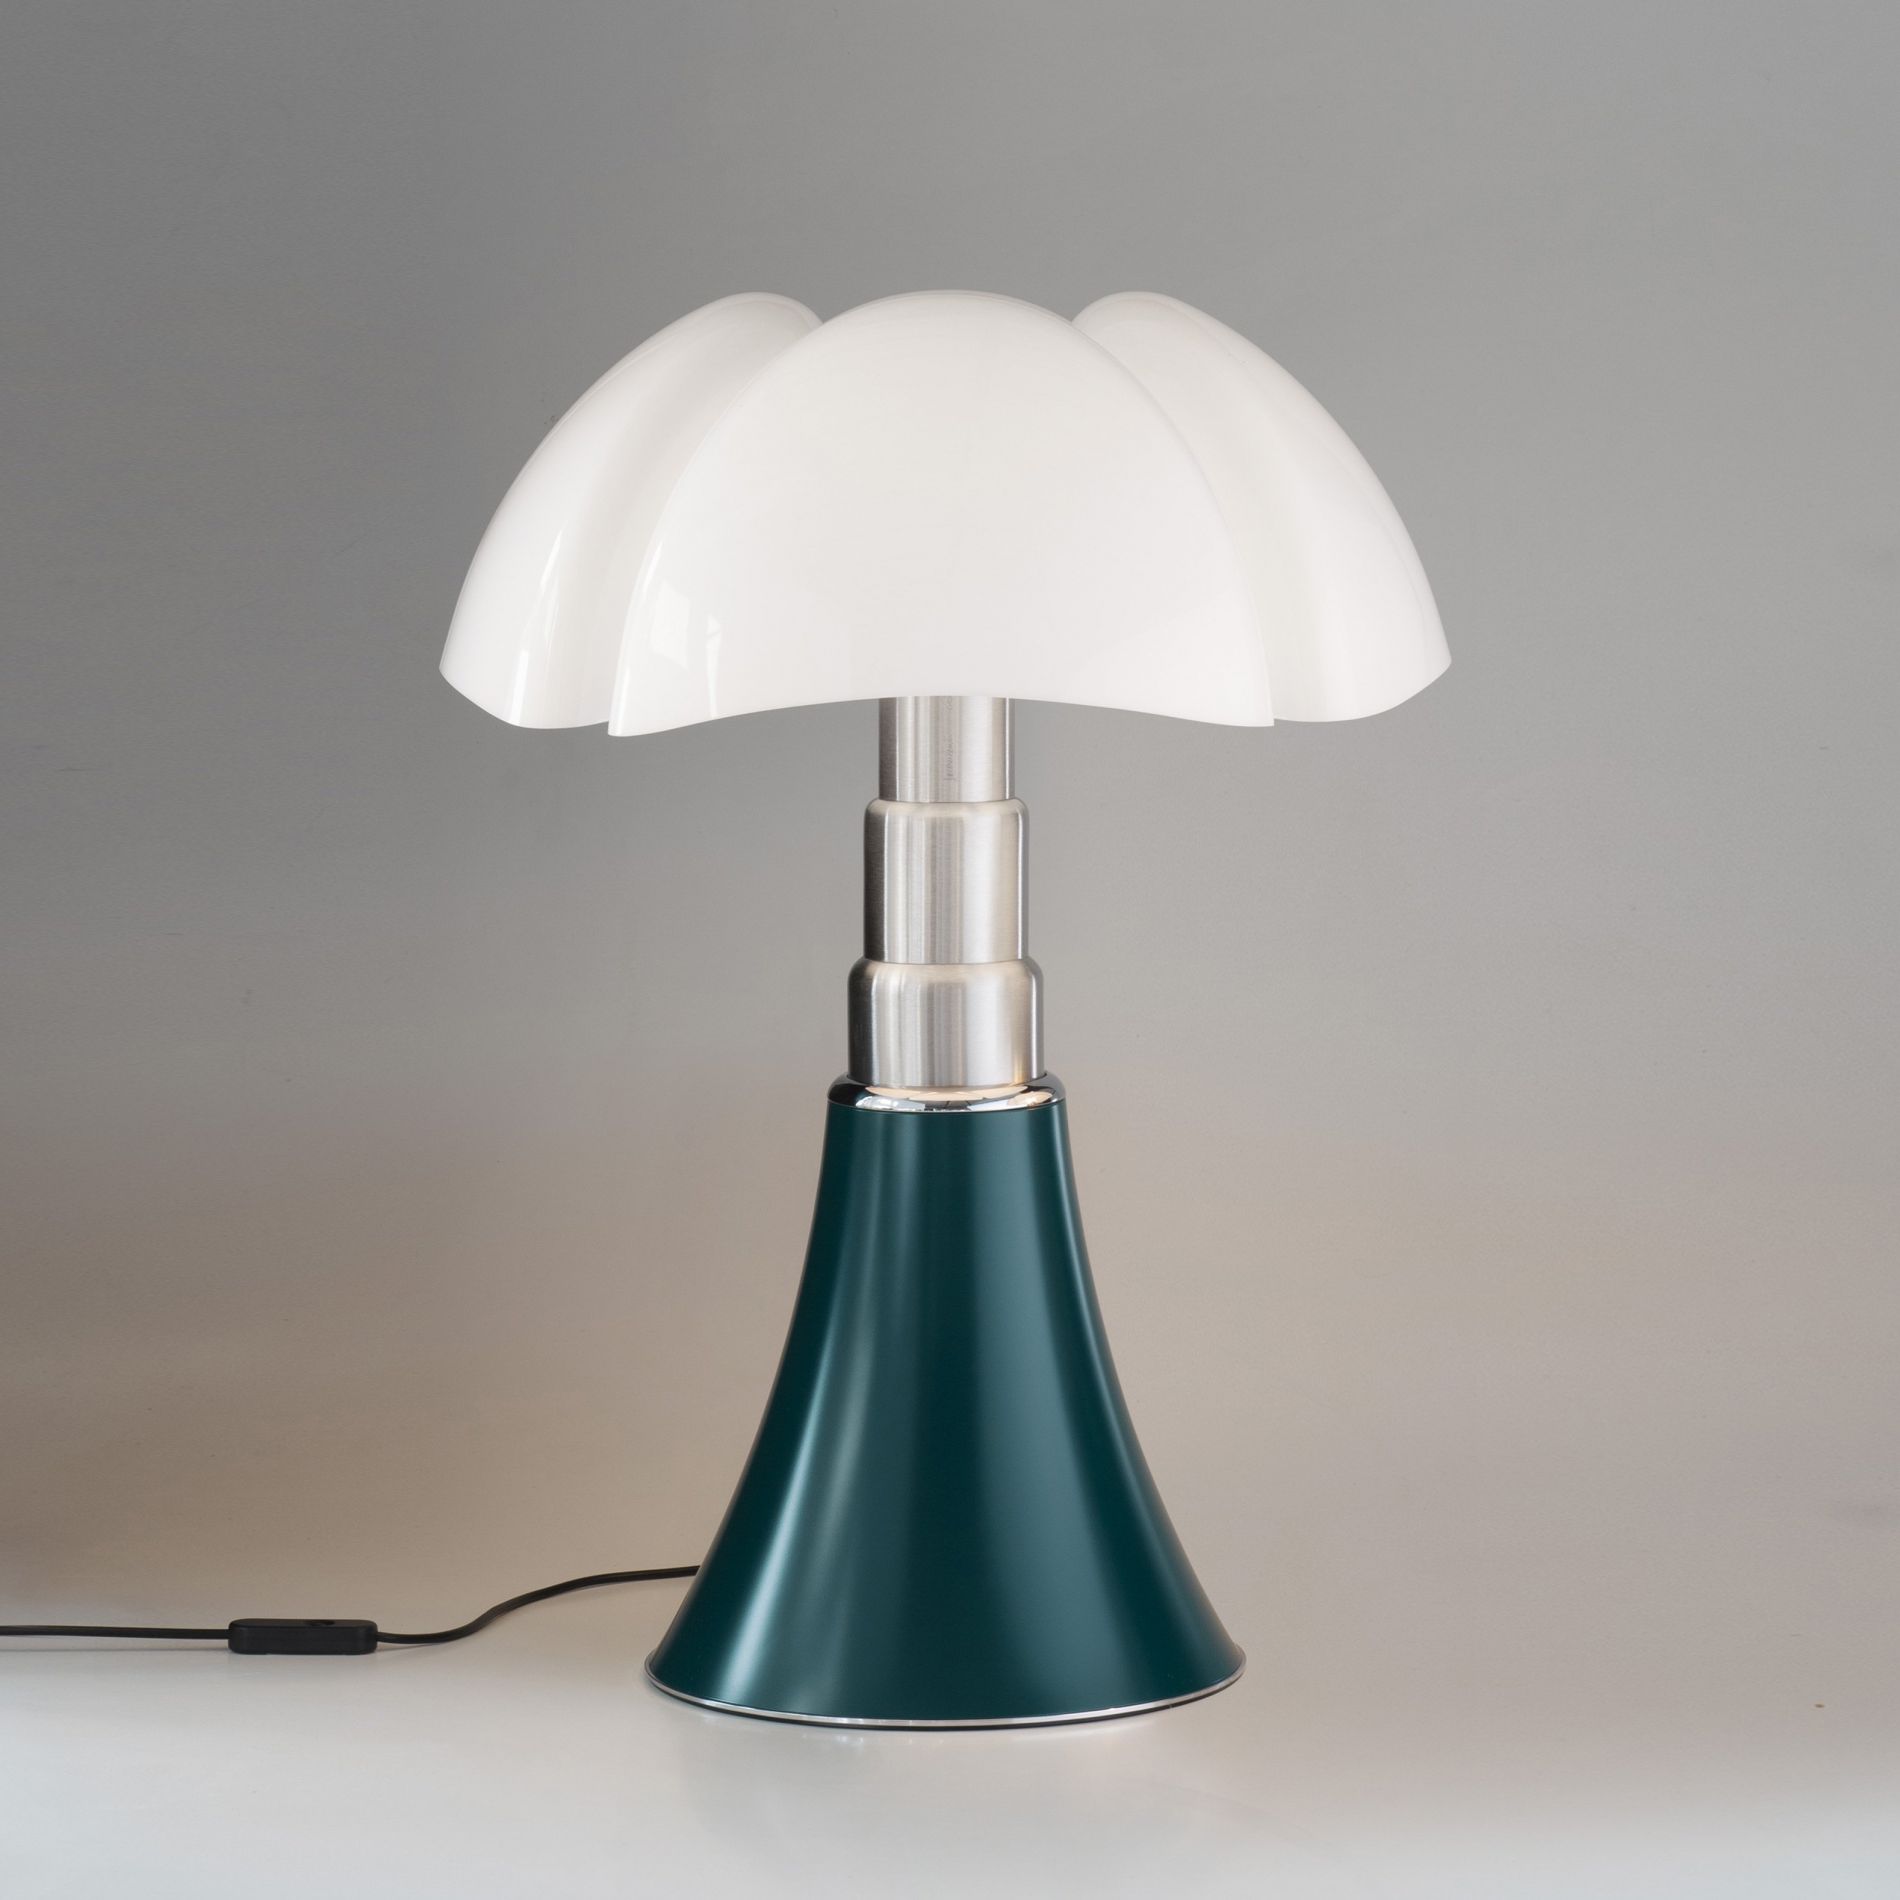 Lampe PIPISTRELLO MEDIUM LED dimmable vert agave